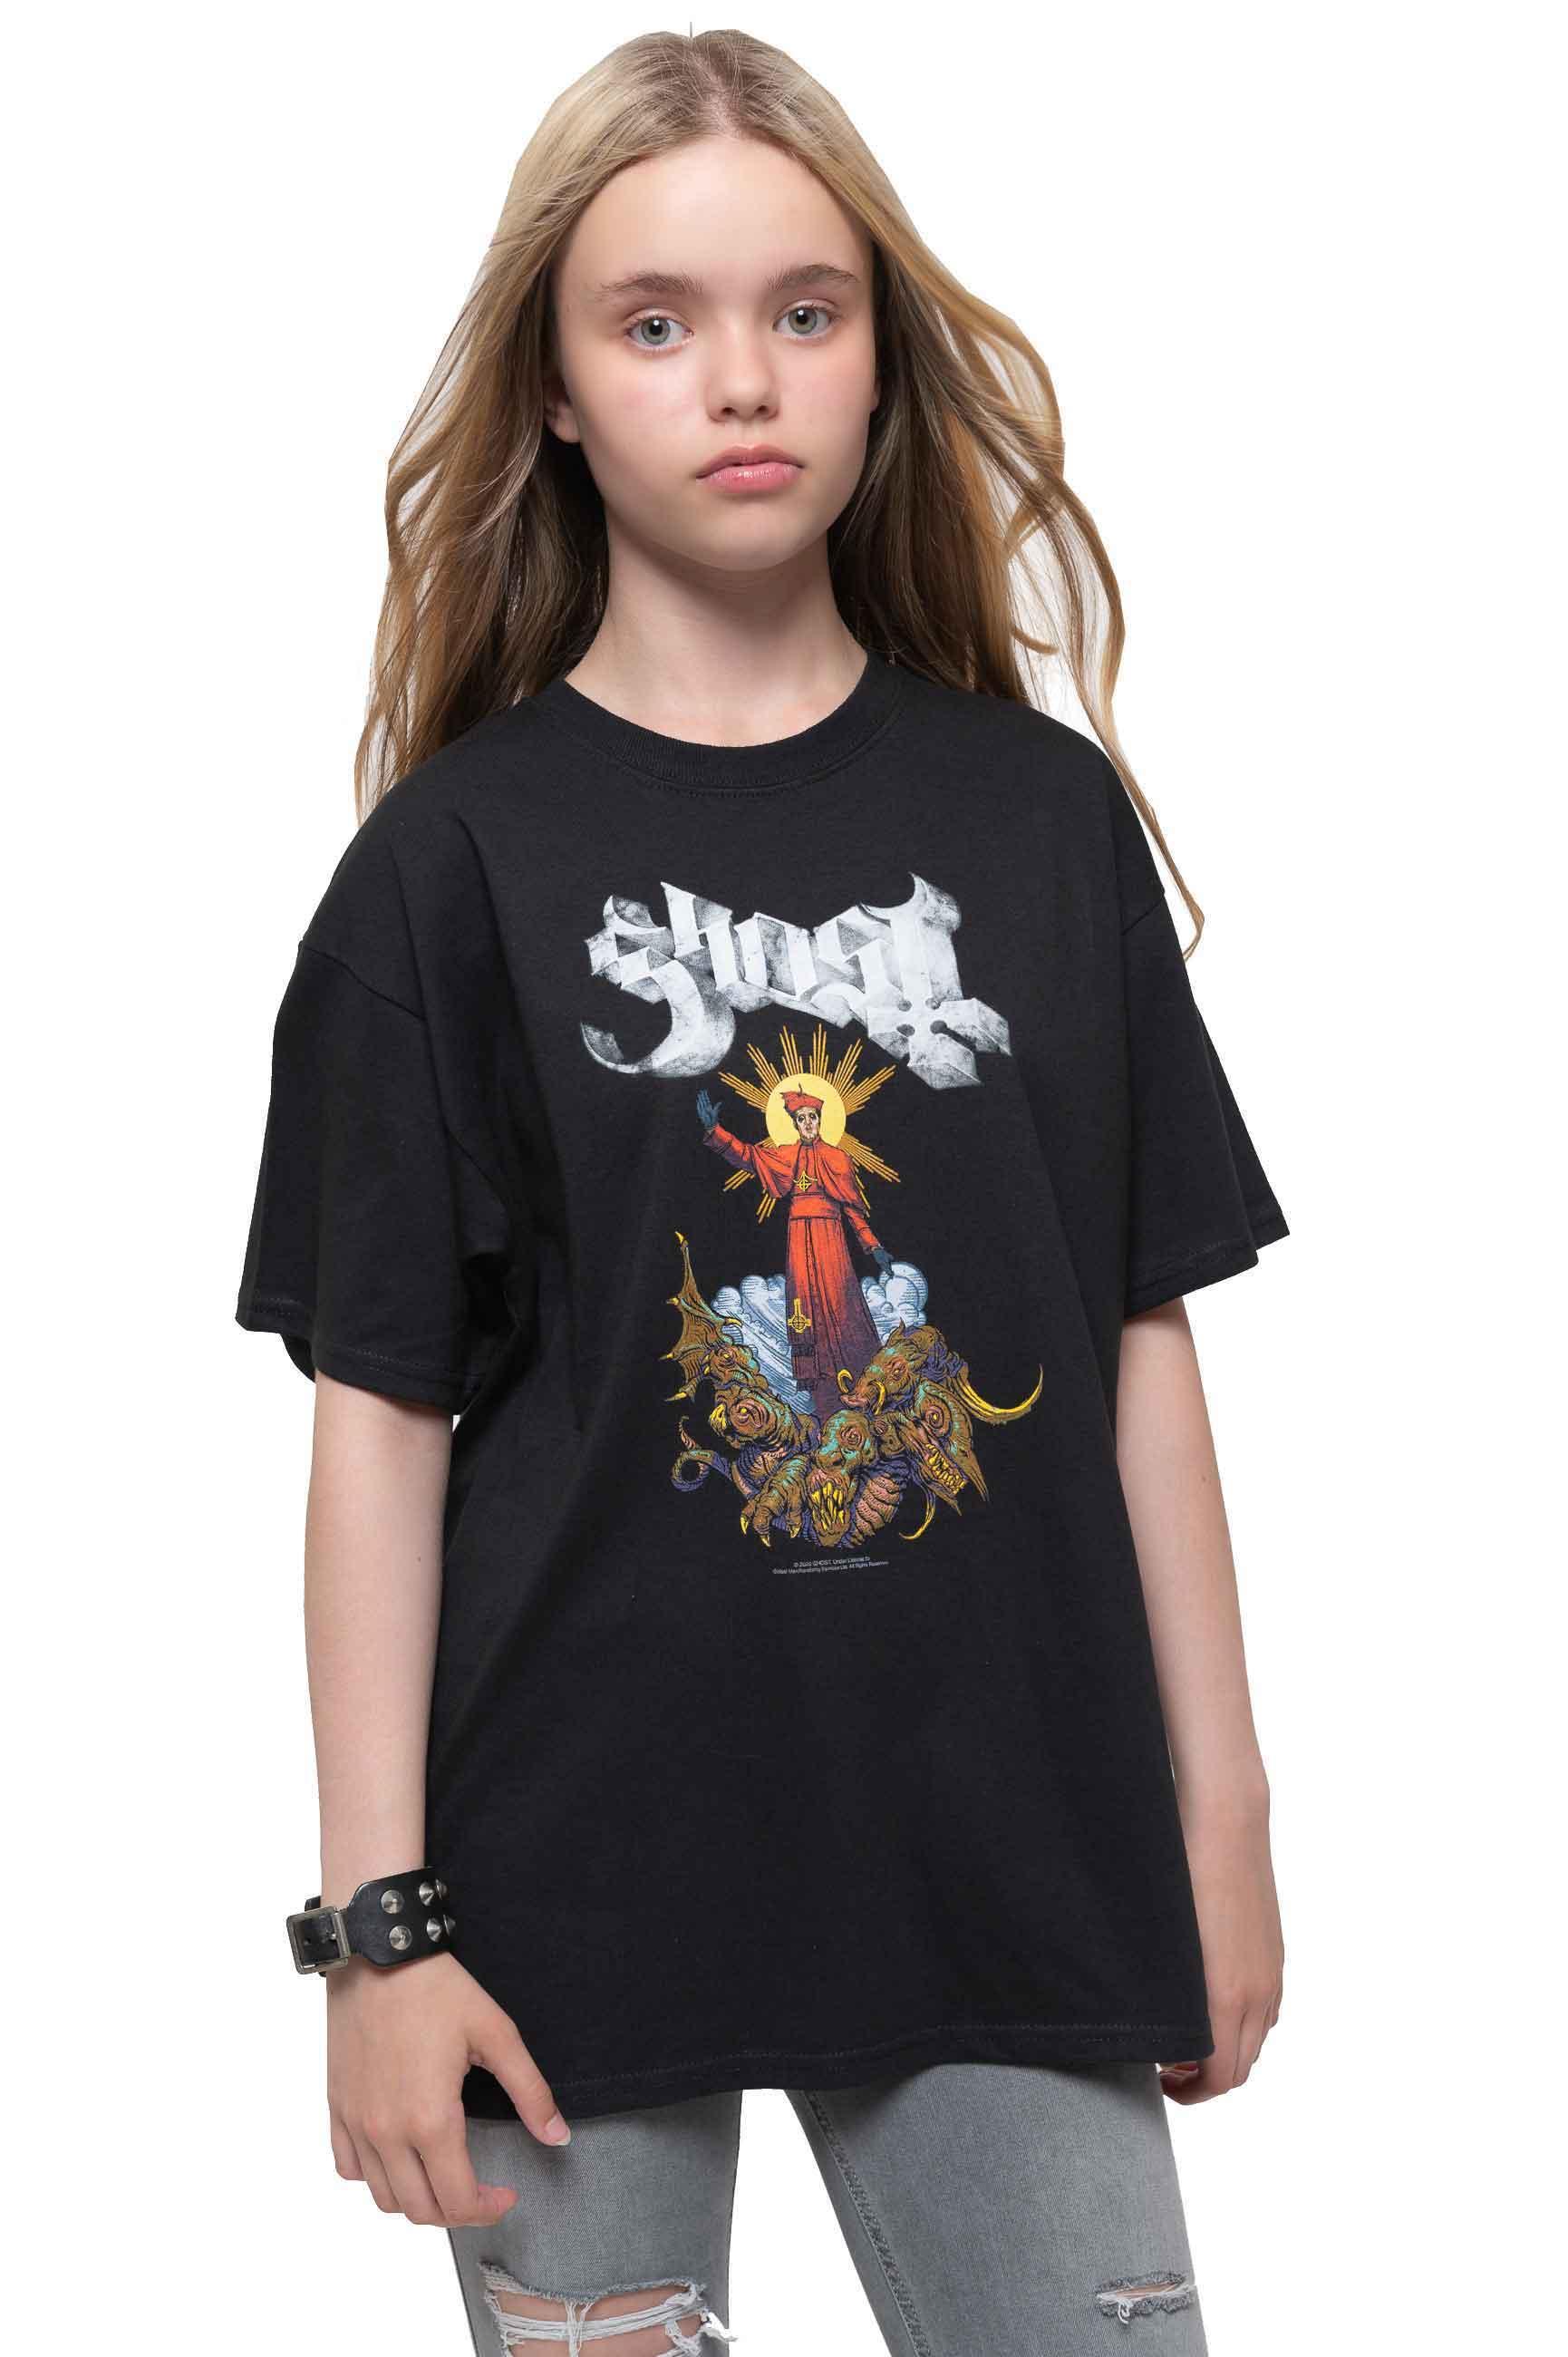 Ghost Kids T Shirt Plaguebringer Band Logo new Official Black Ages 5-14 yrs